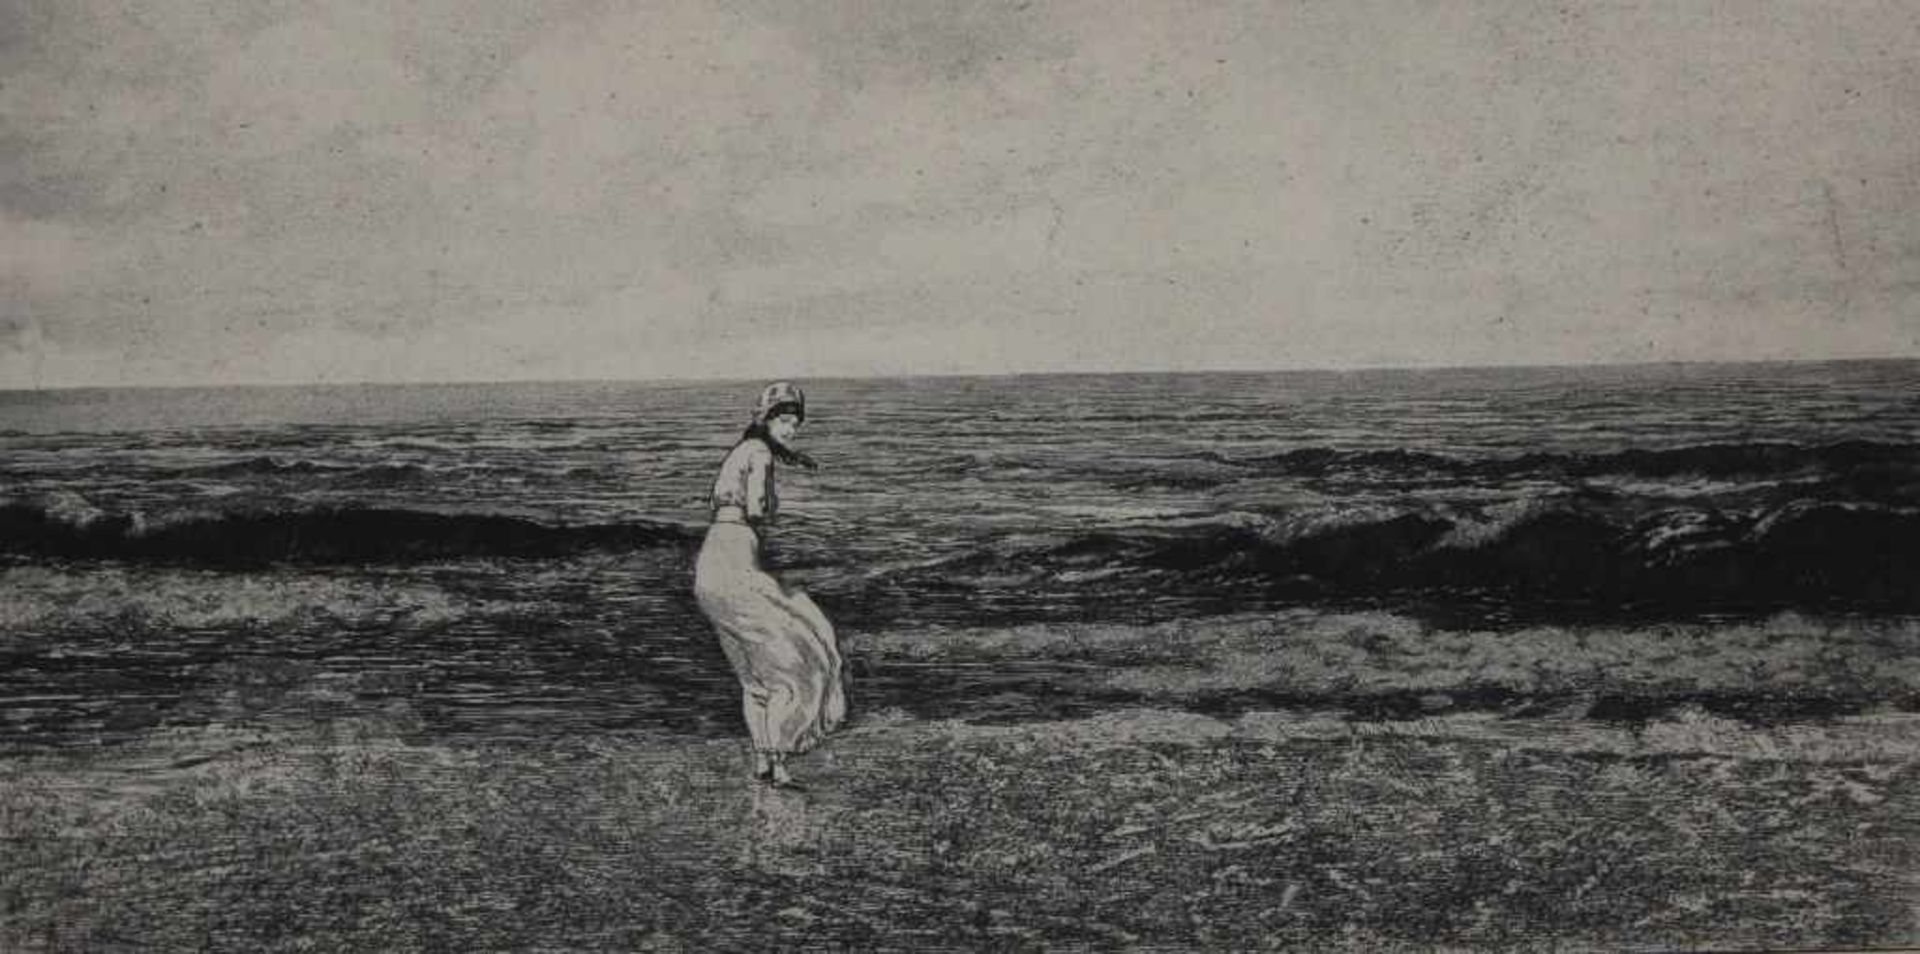 Radierung - Max Klinger (1857 Leipzig - 1920 Großjena) "Am Meer", aus: Intermezzi Opus IV,